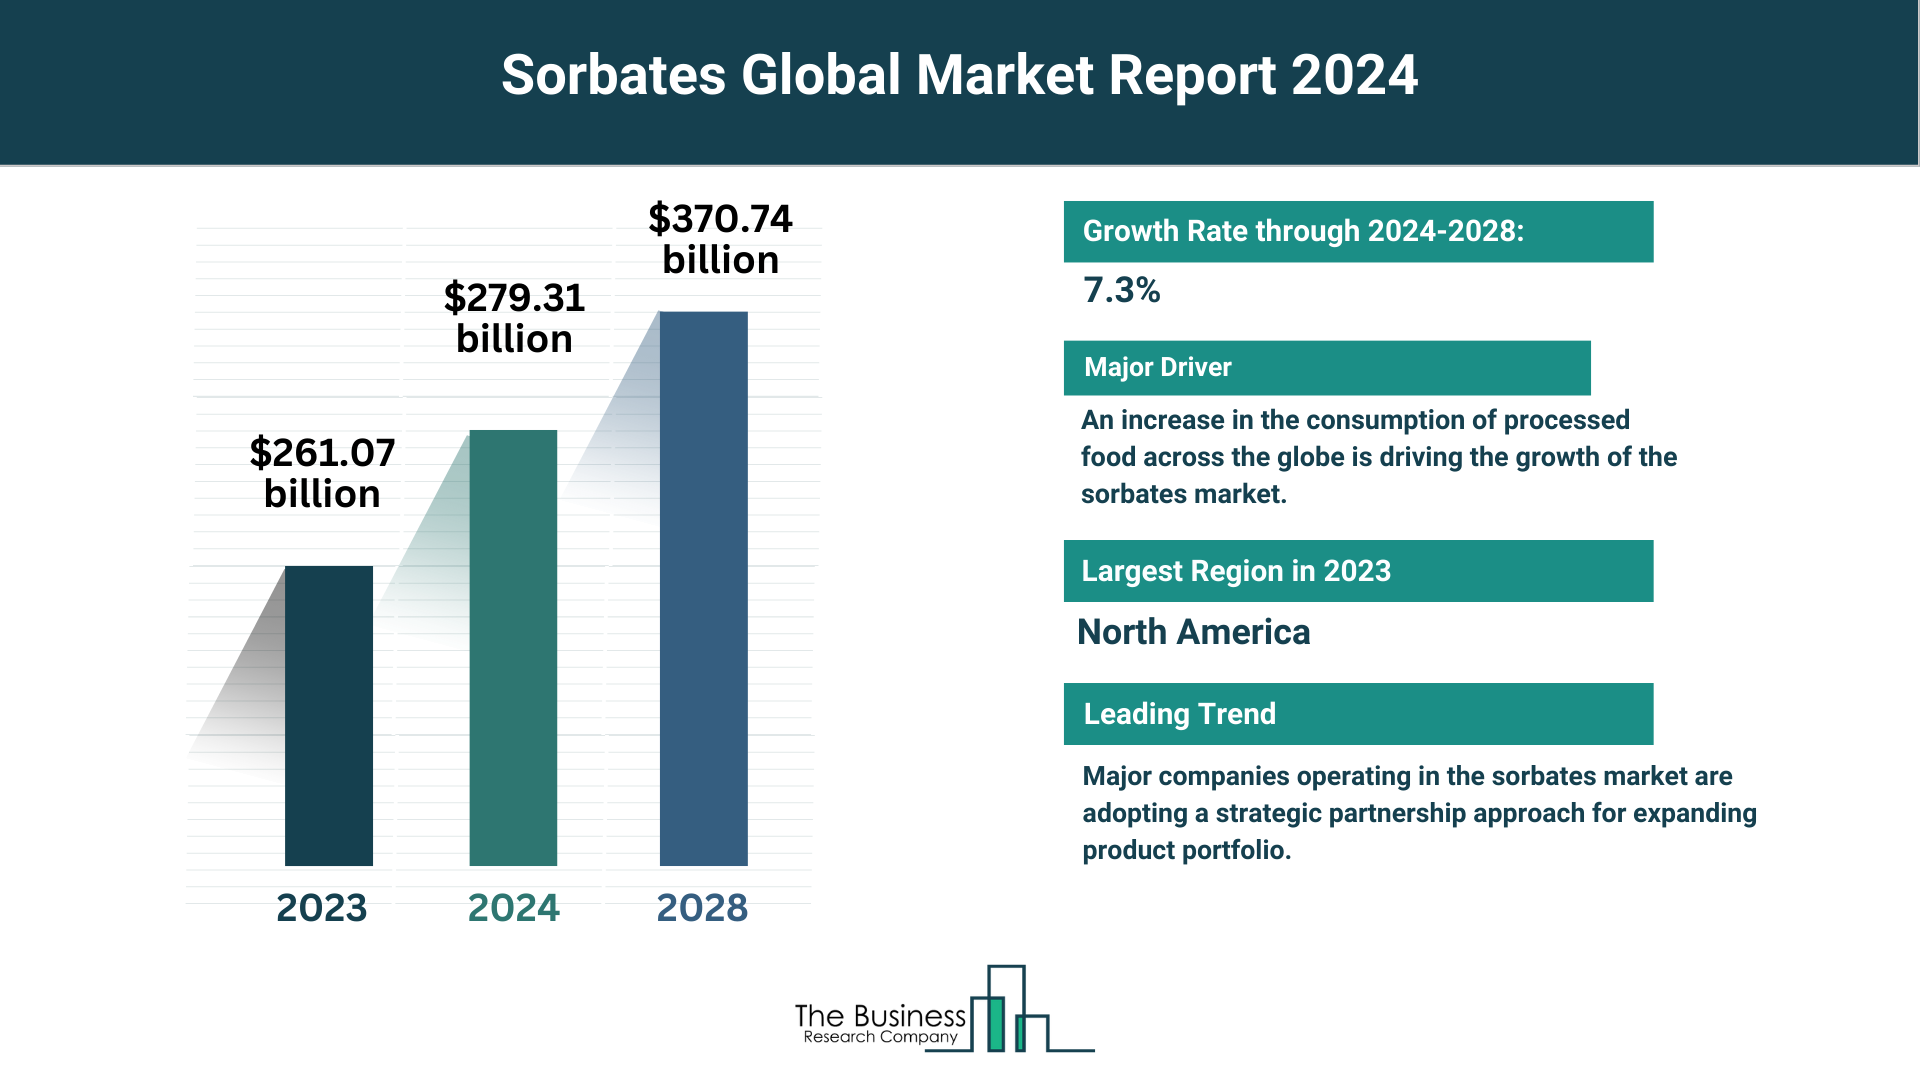 5 Major Insights Into The Sorbates Market Report 2024